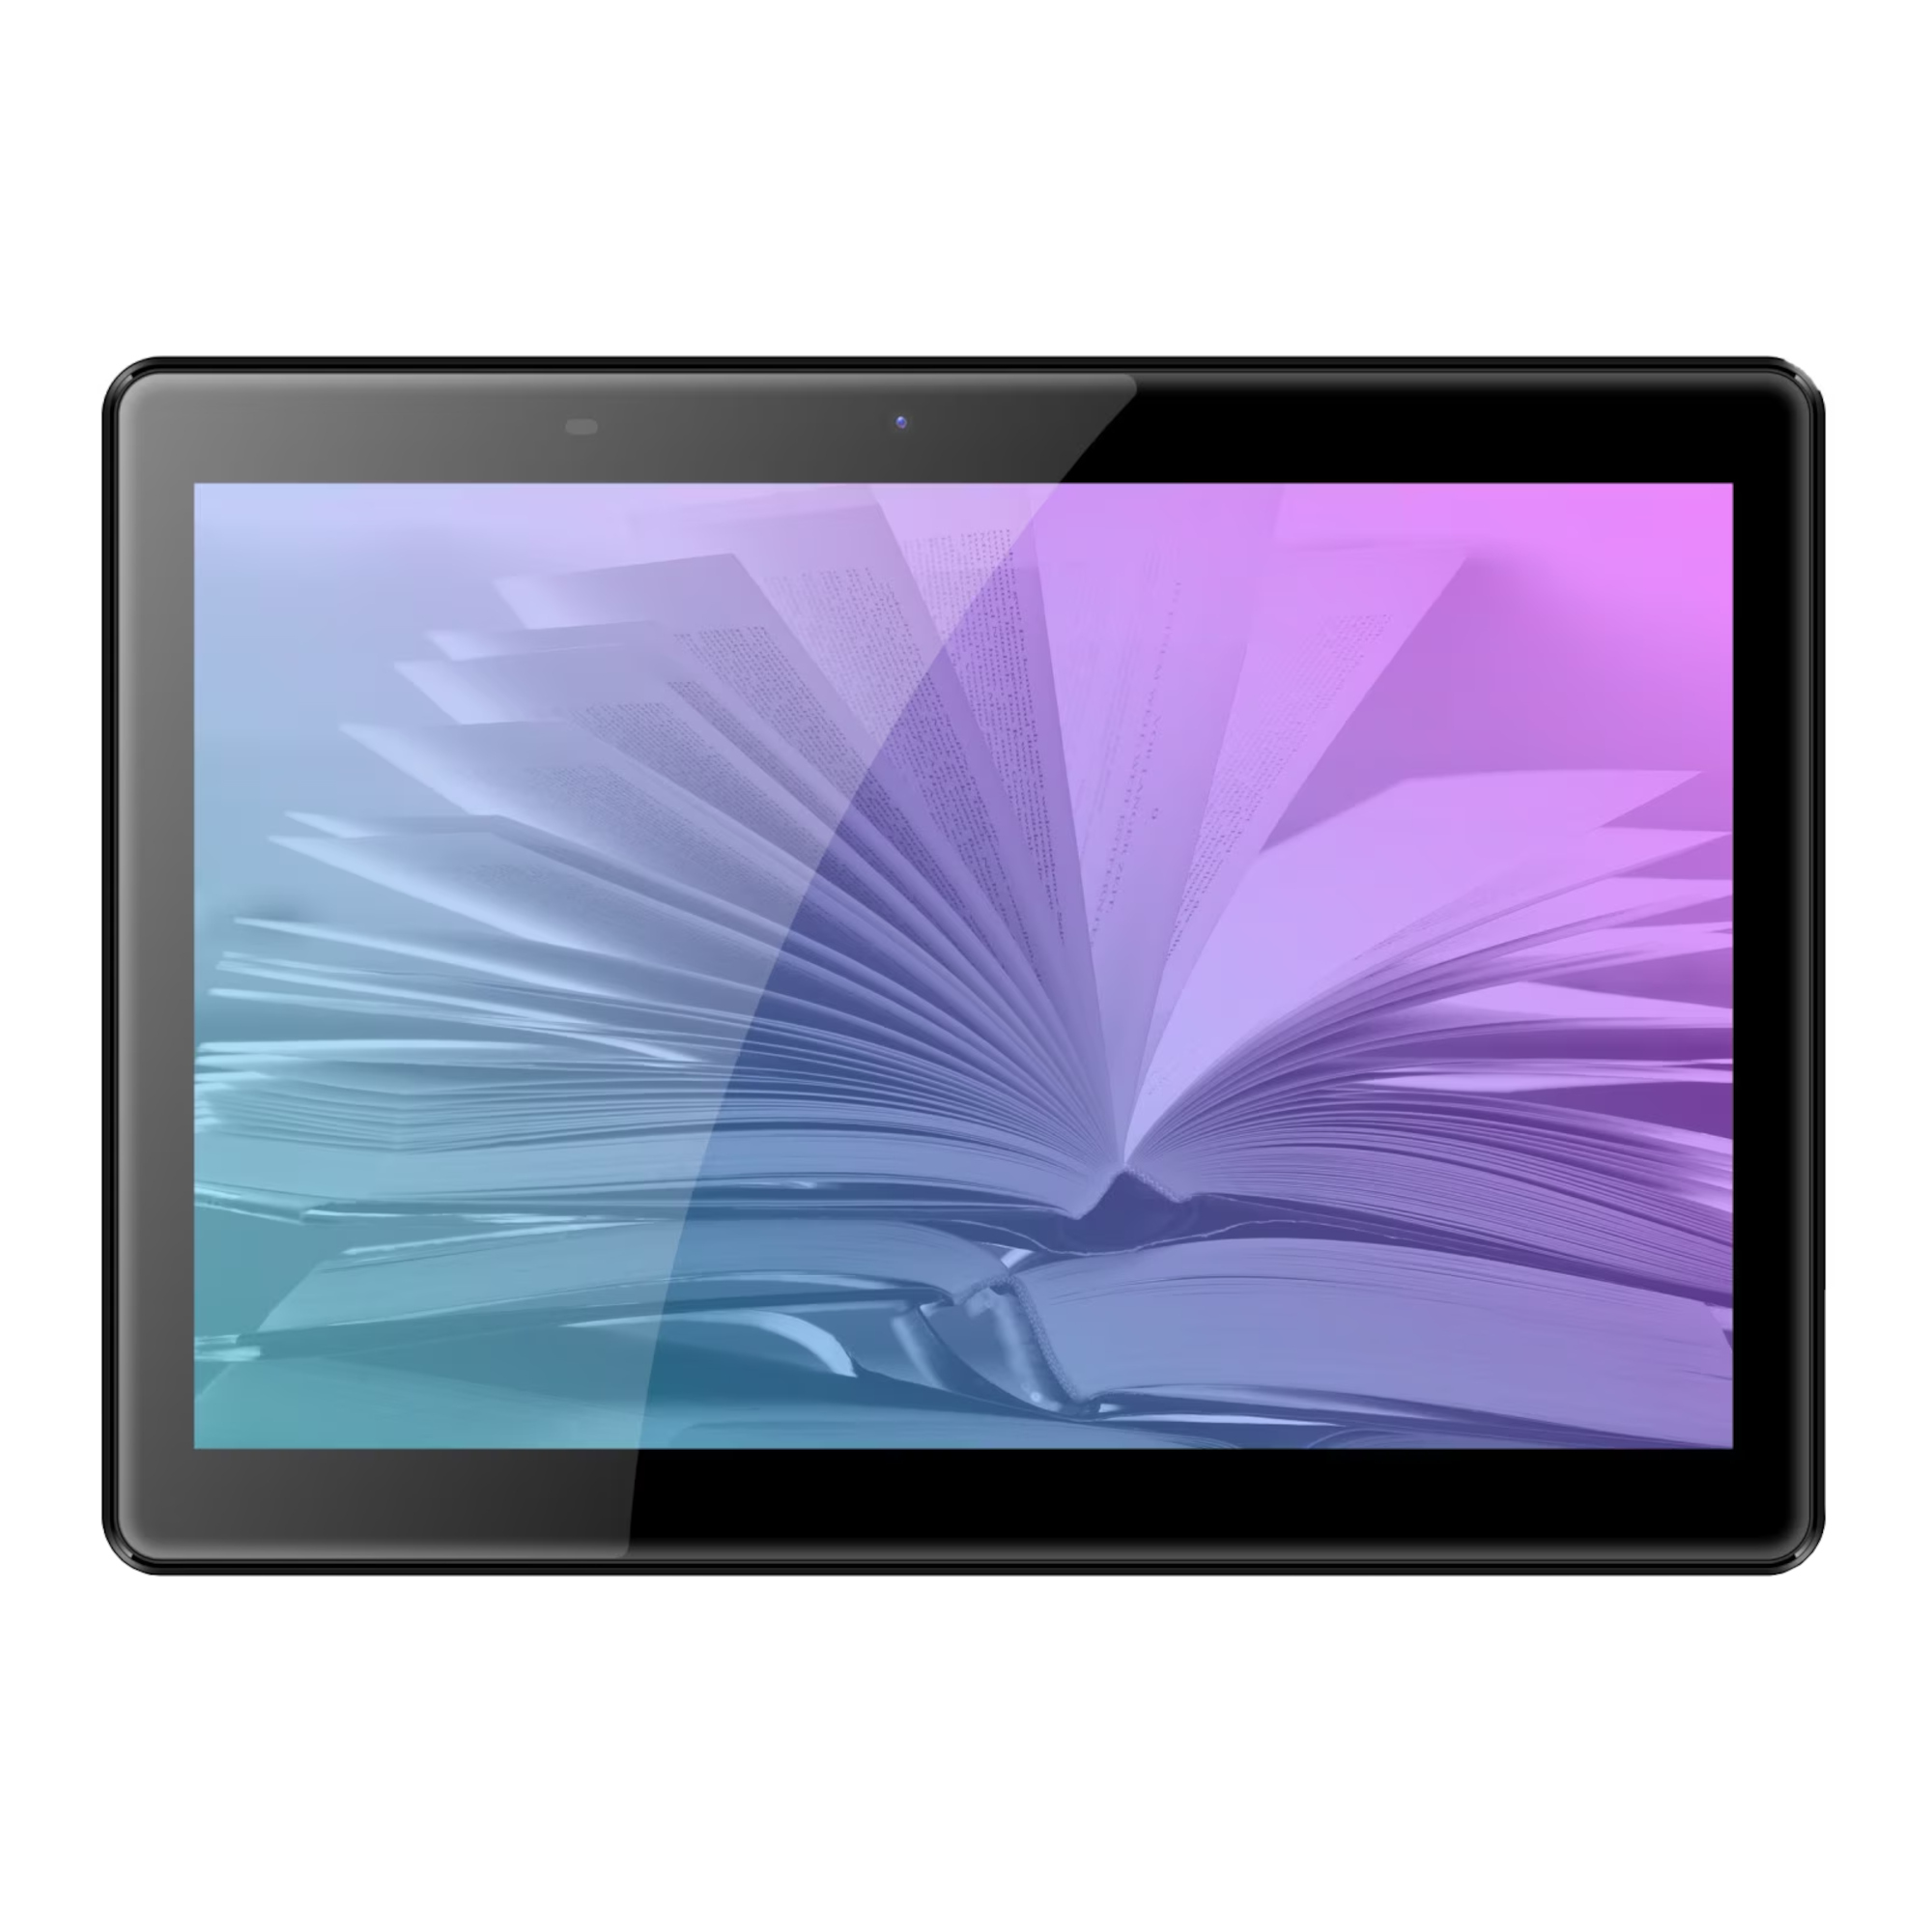 Tableta Allview Viva H1003 Lte Pro/1, 10.1